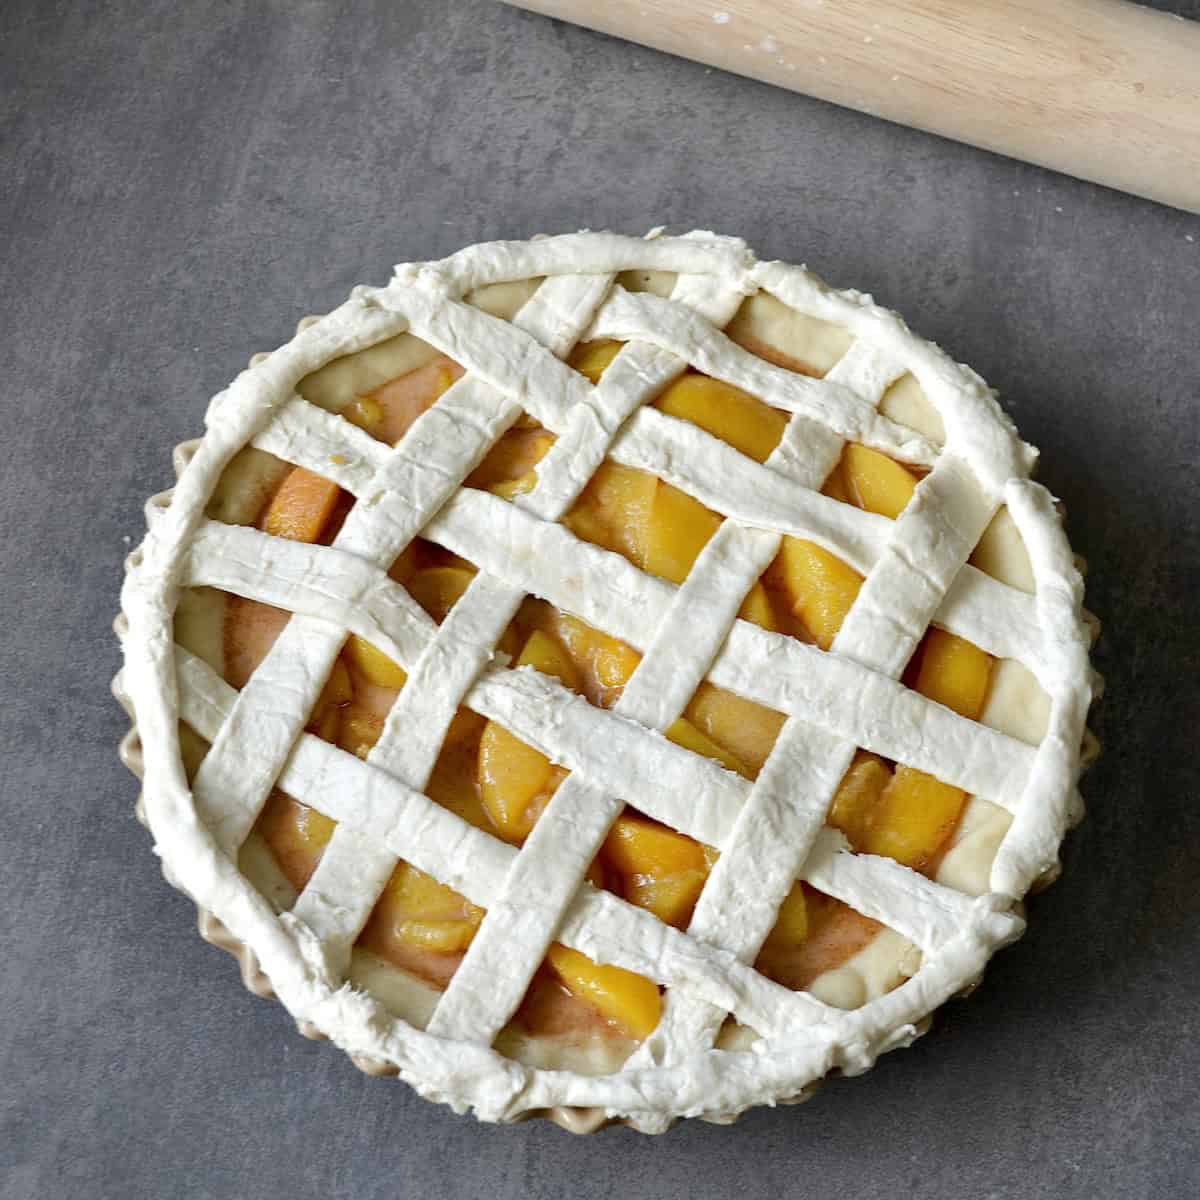 Unbaked peach pie with a lattice crust